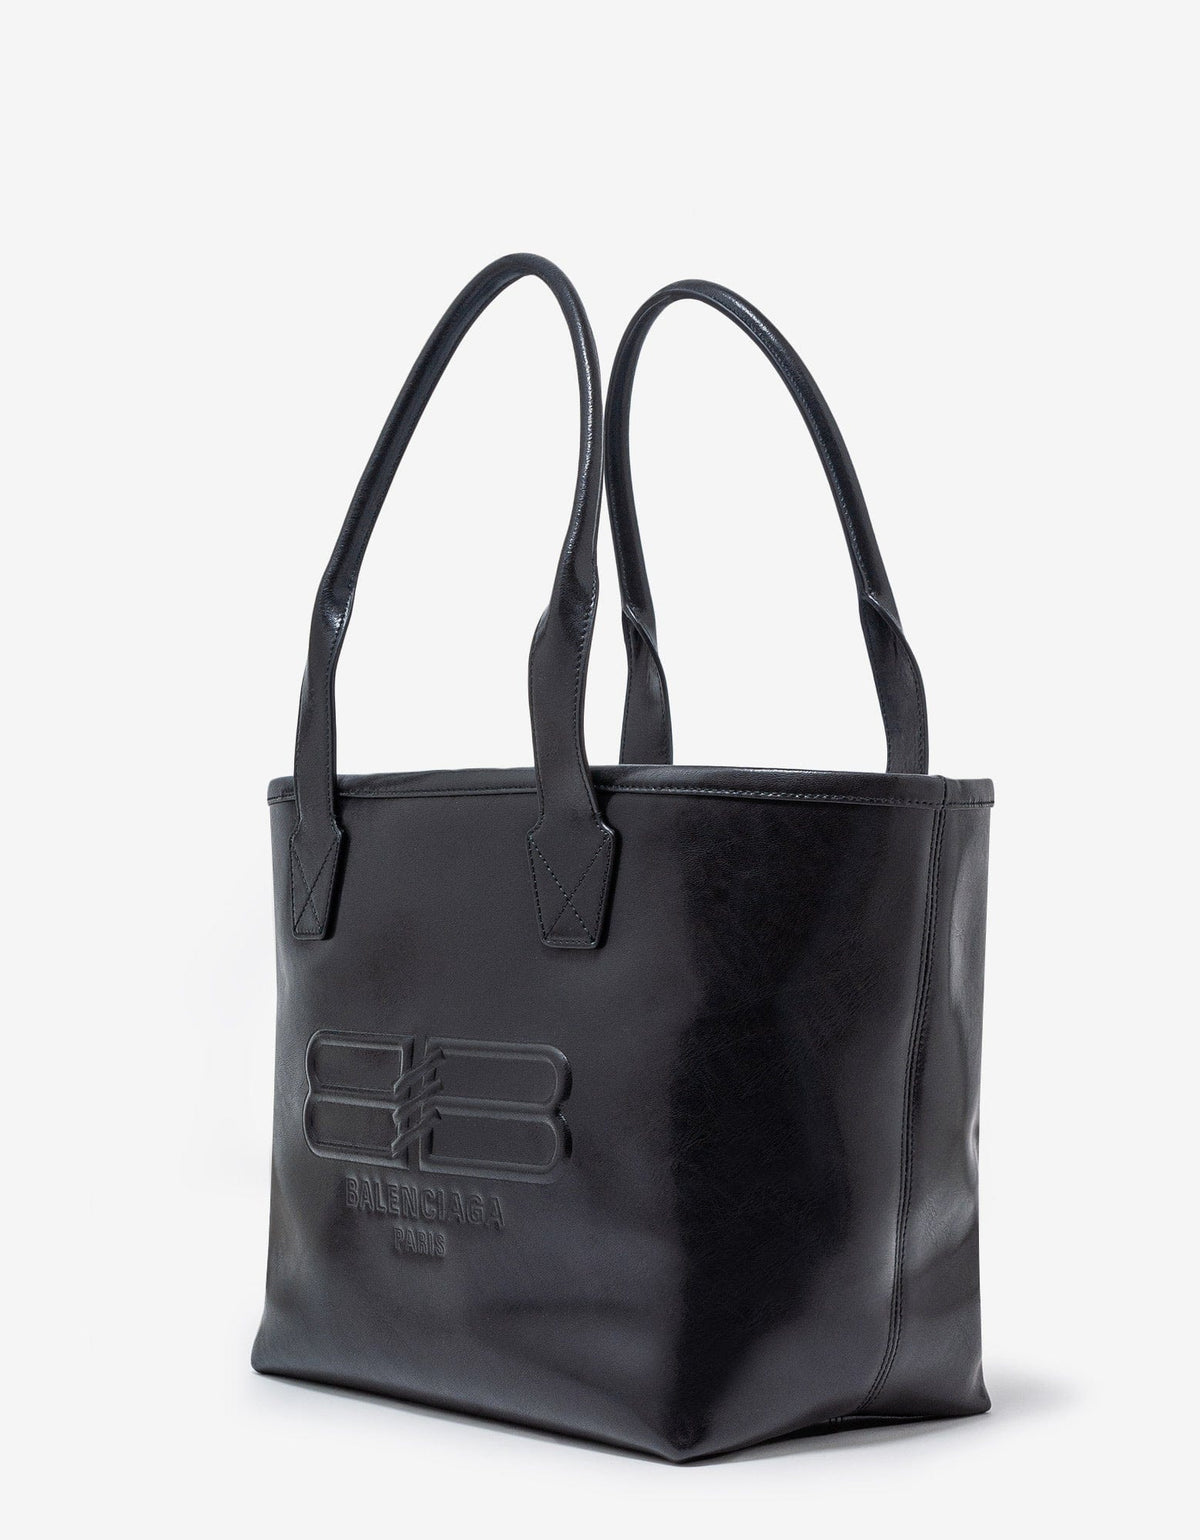 Balenciaga Black Small BB Jumbo Tote Bag